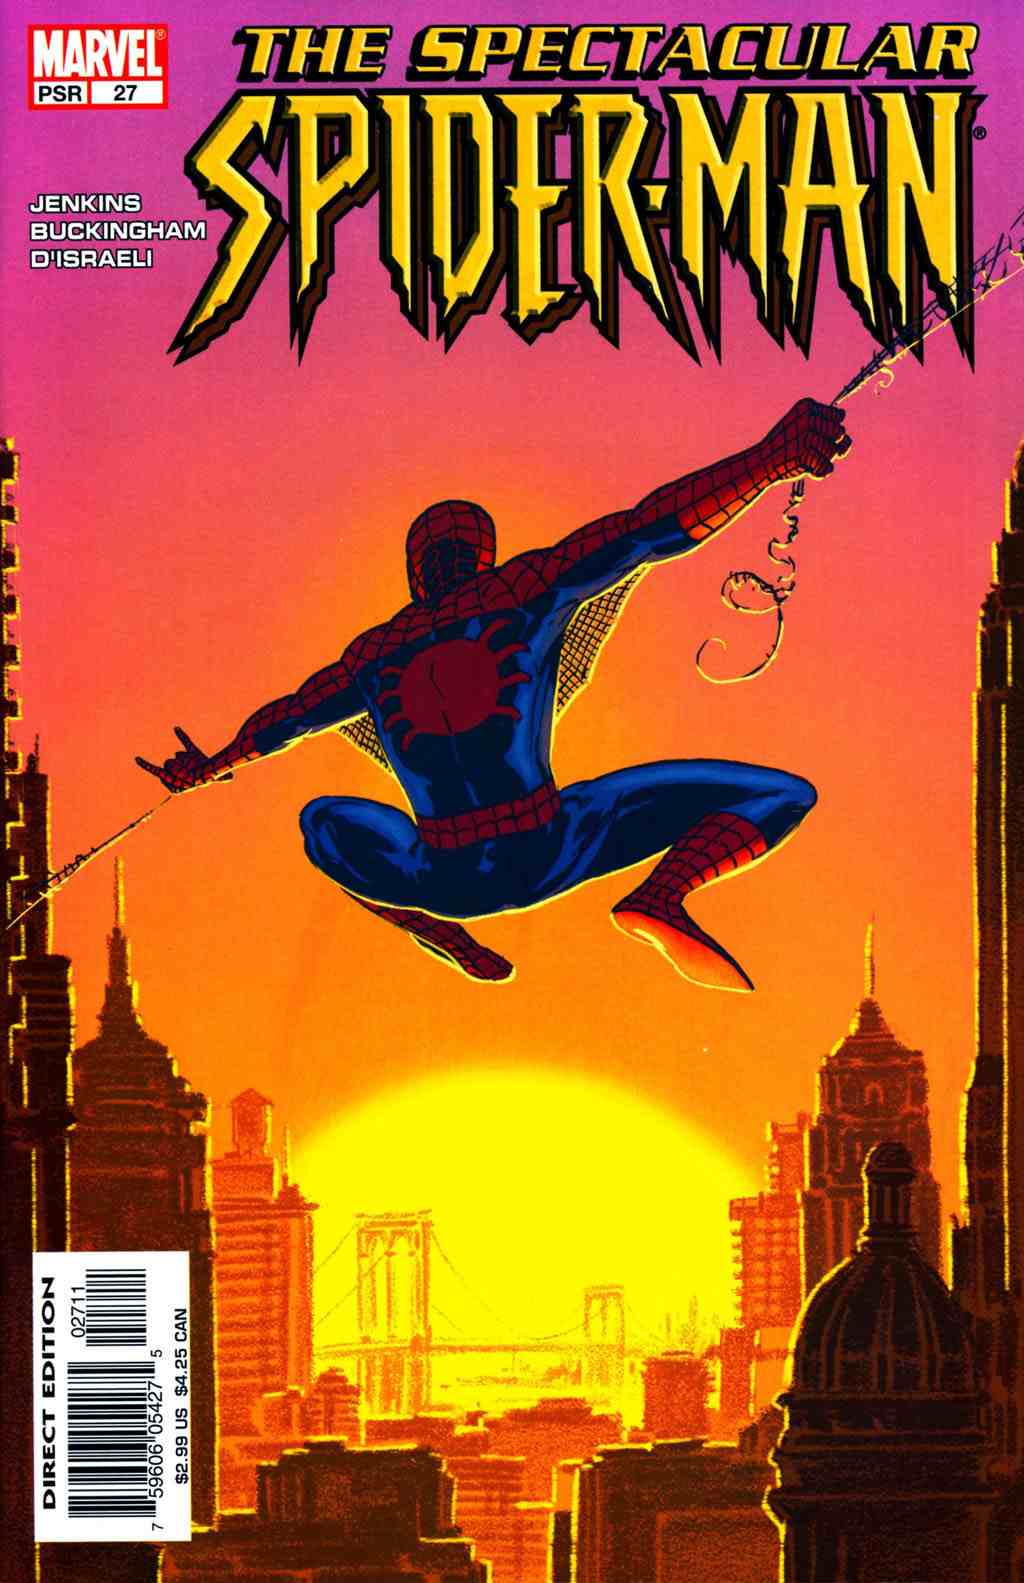 The Spectacular Spider-Man Vol. 2 #27